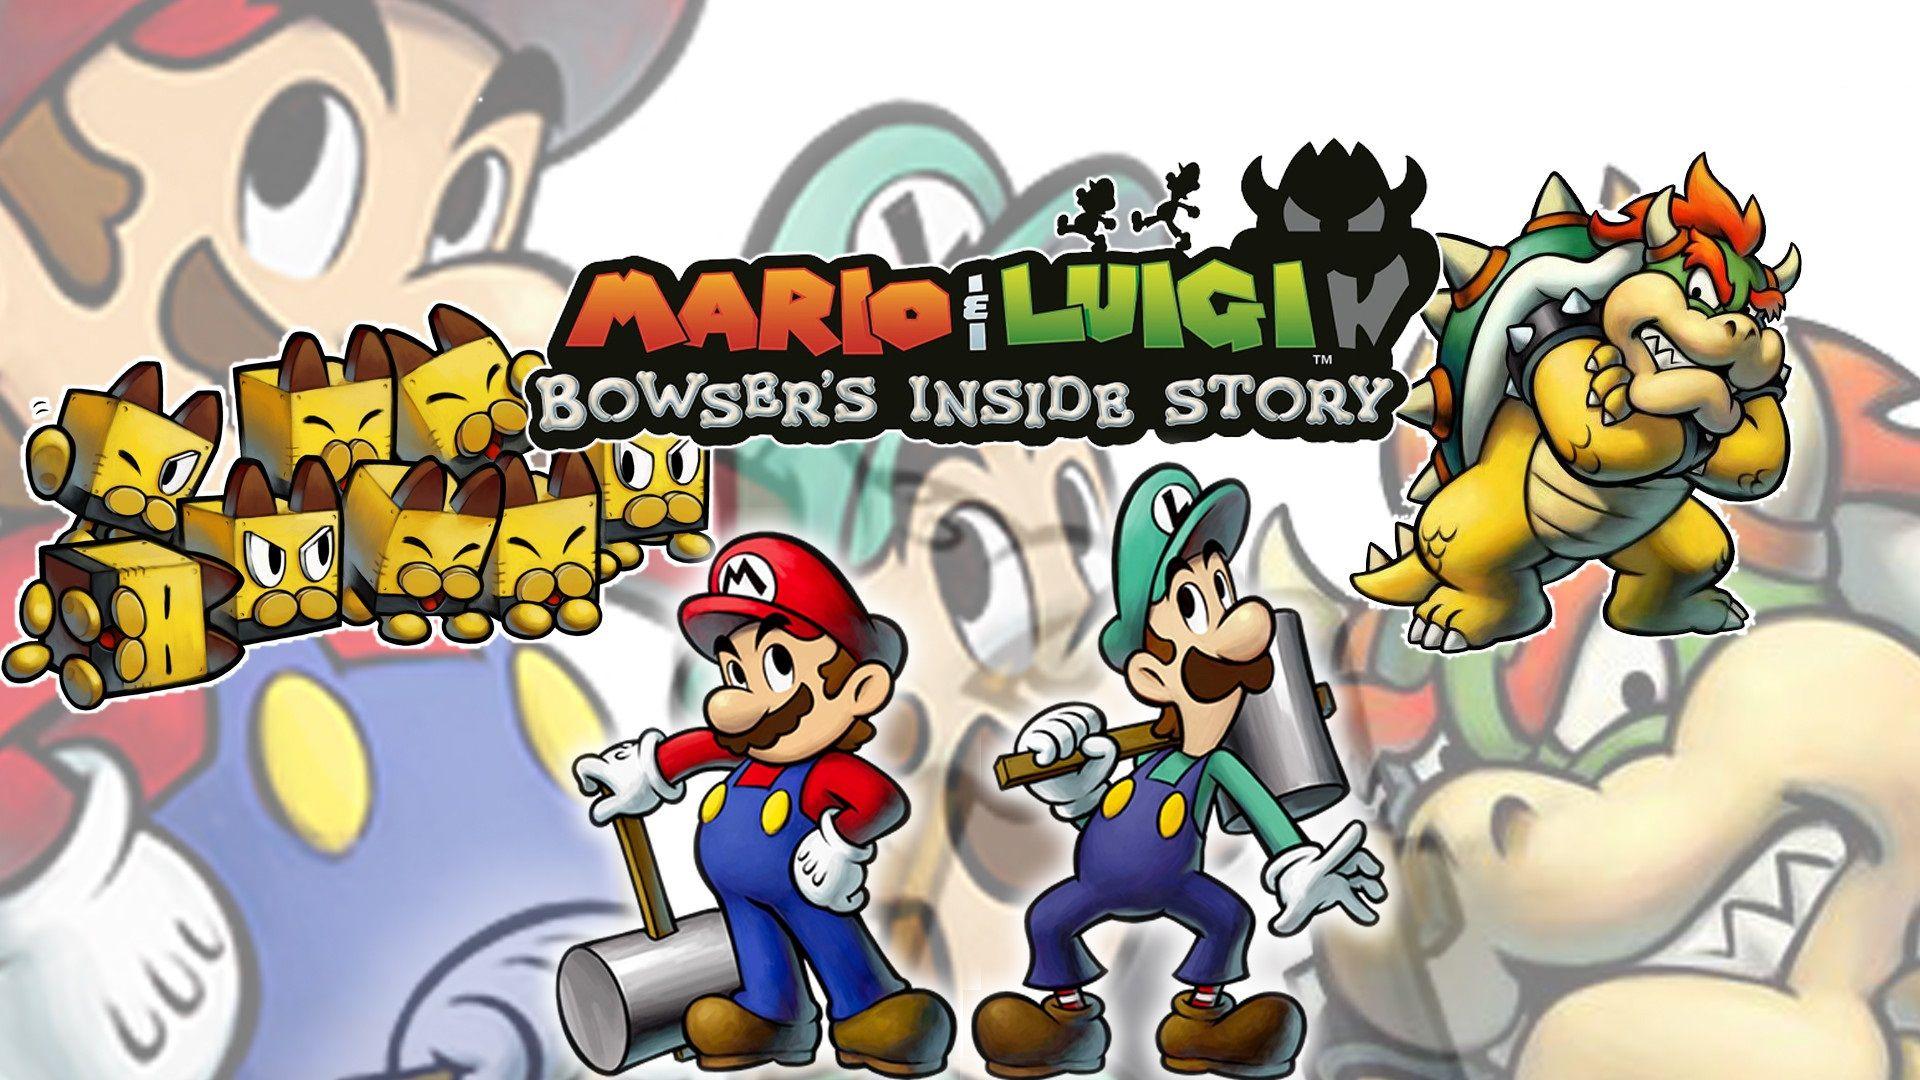 Mario & Luigi Bowser Inside Story Wallpapers.